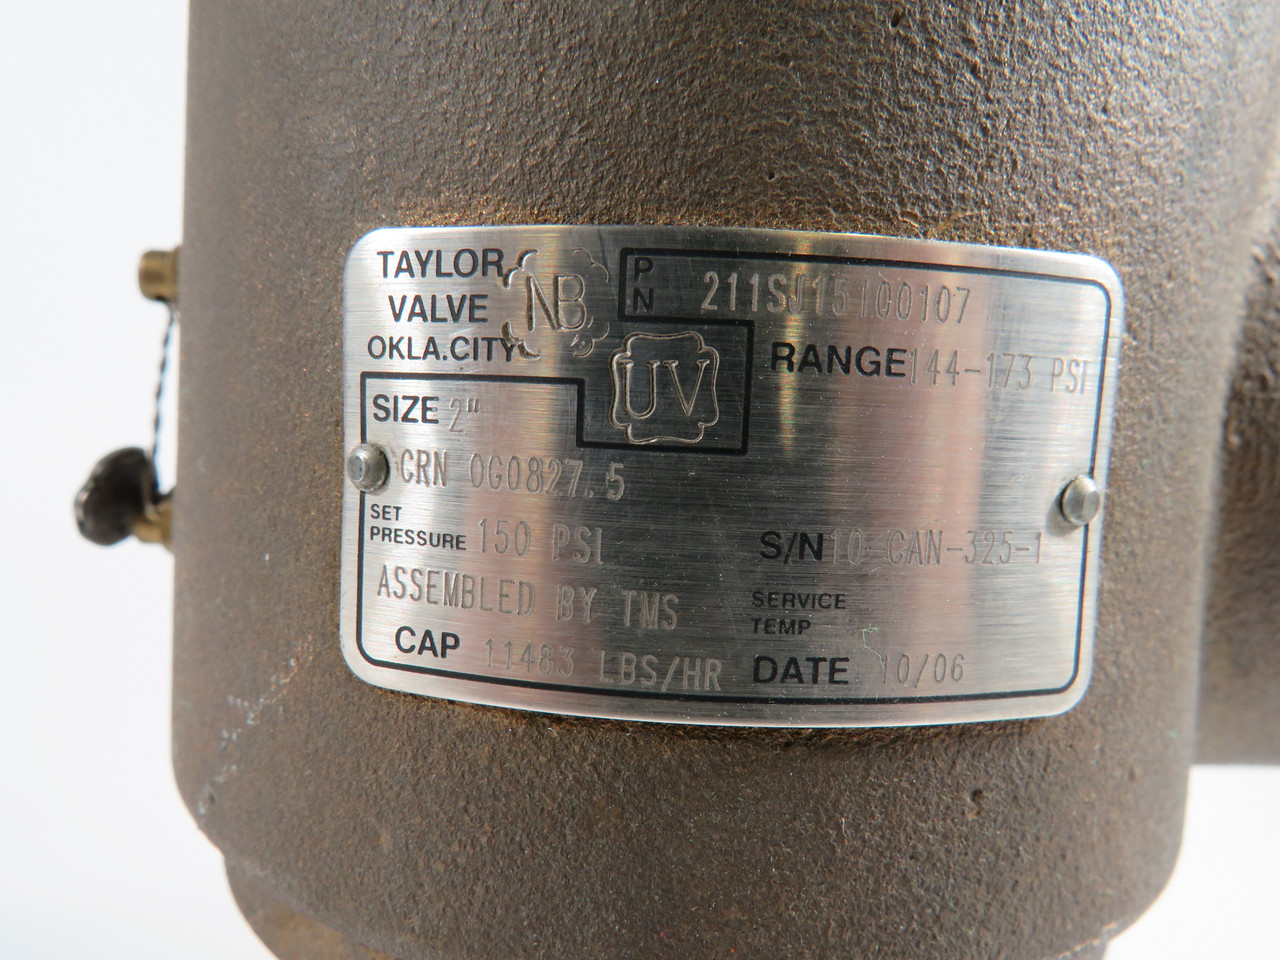 Taylor Valve 211SJ15100107 Pressure Relief Valve 144-173 psi Size 2" USED